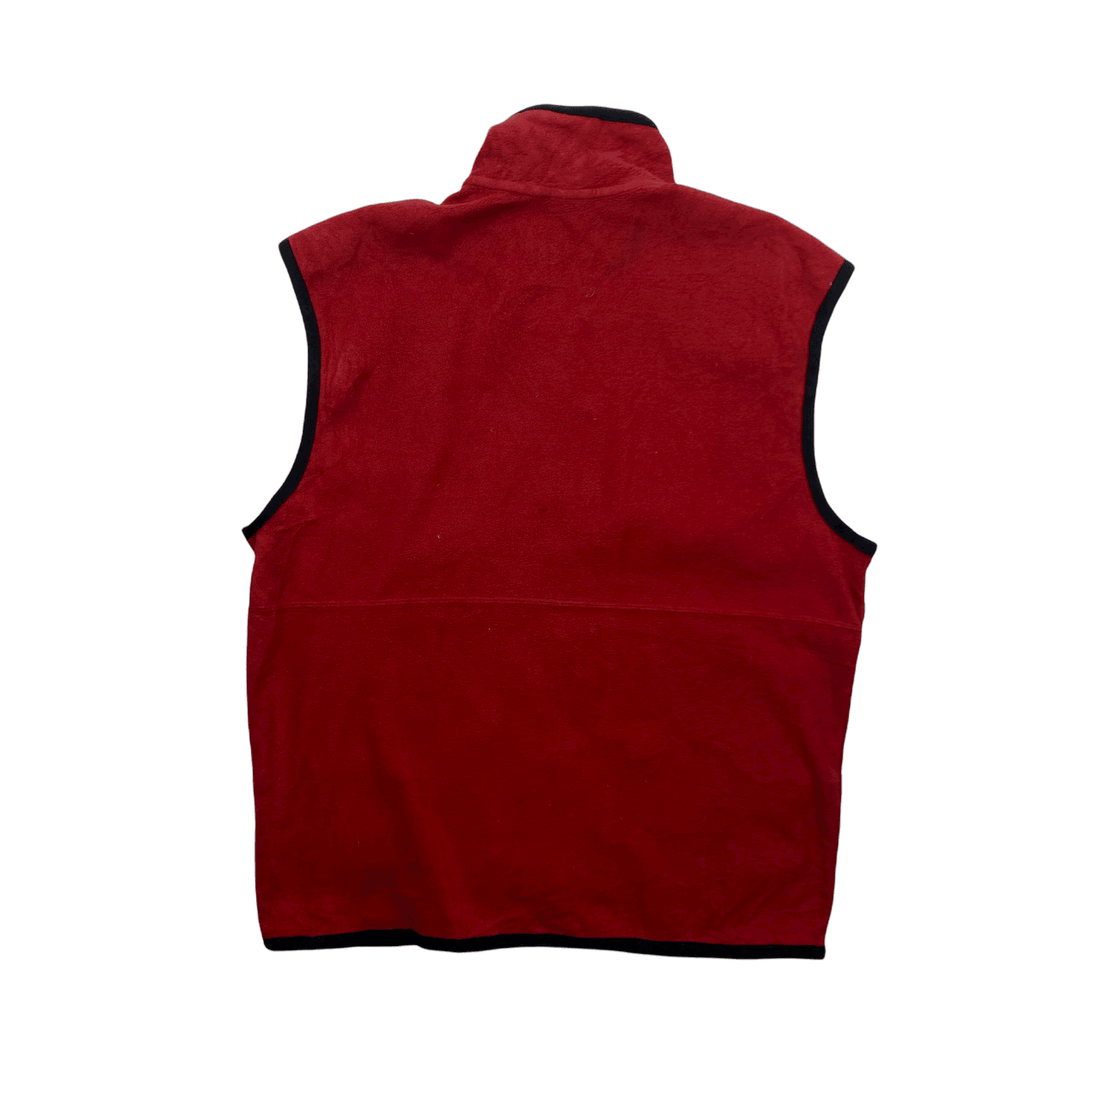 Vintage 90s Red Nike Fleece Vest/ Gilet - Medium - The Streetwear Studio